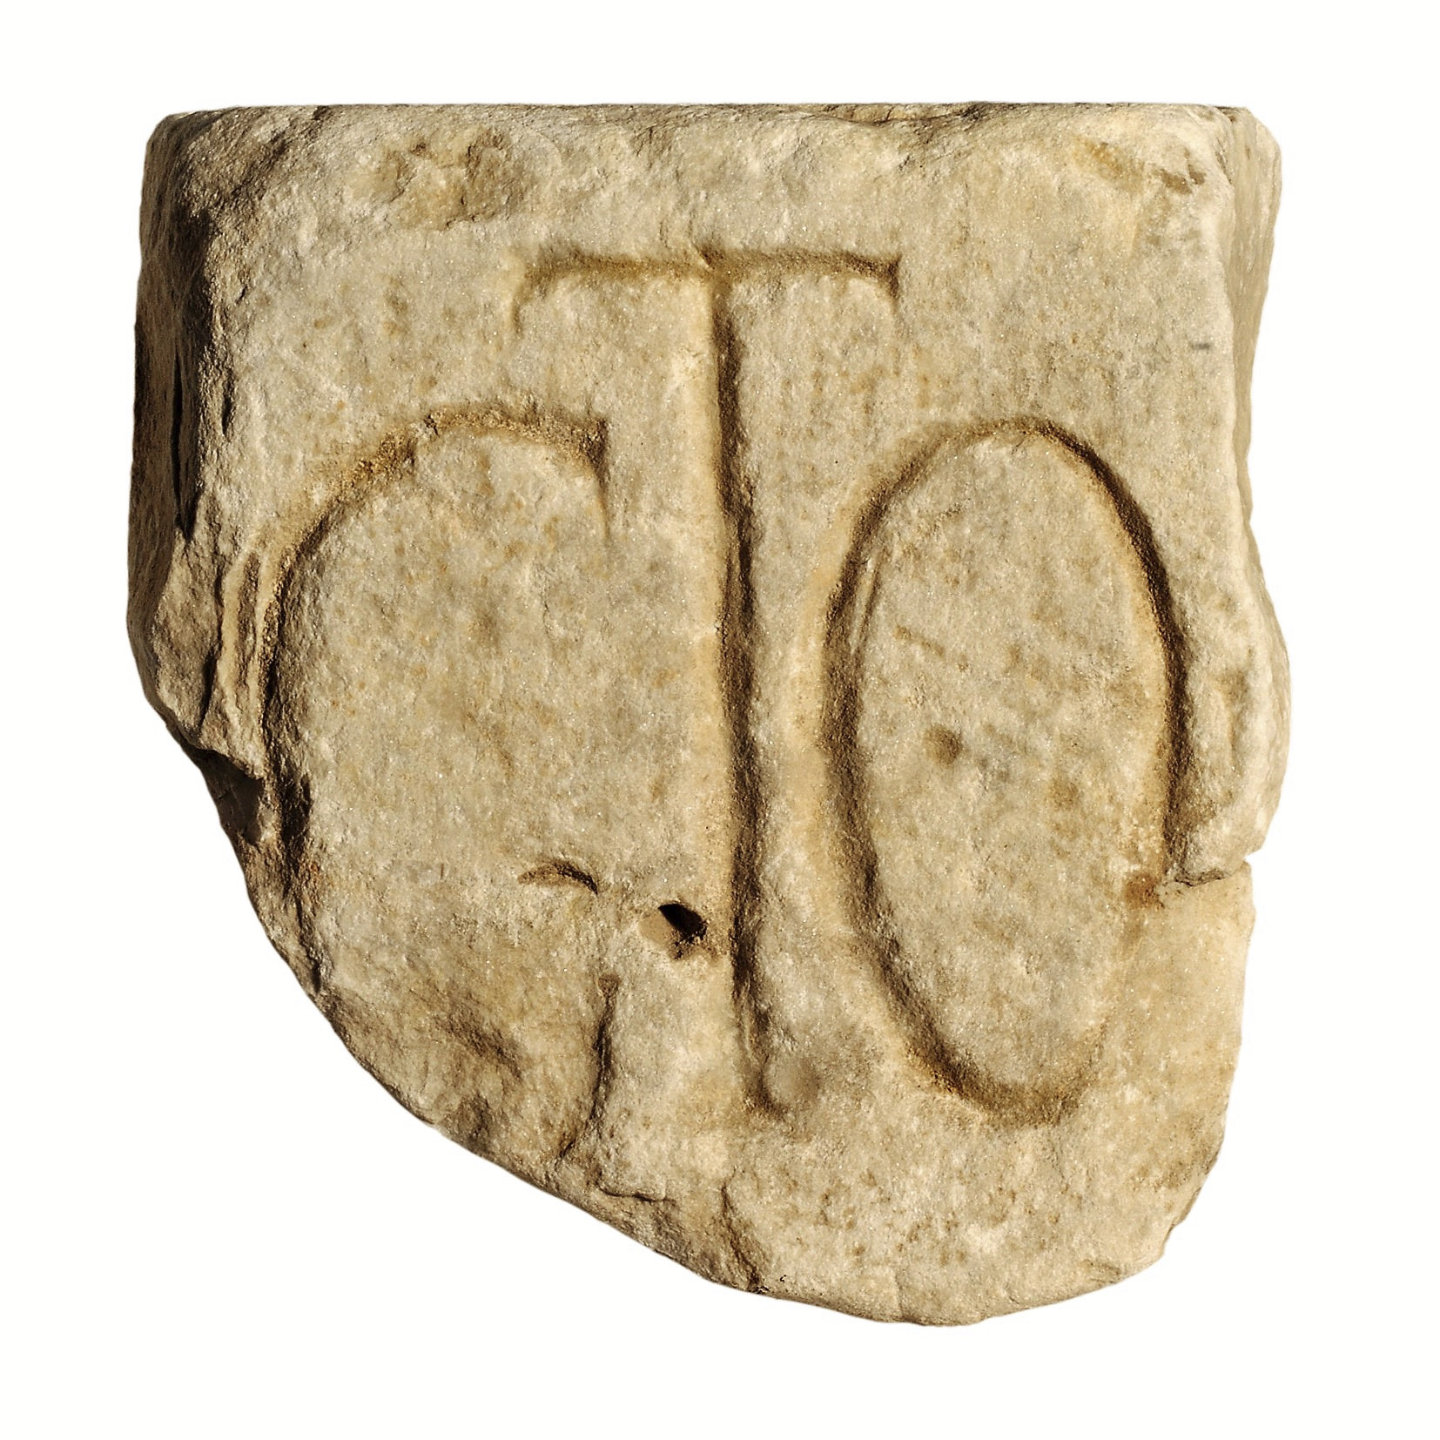 Inscription of Tarrragona